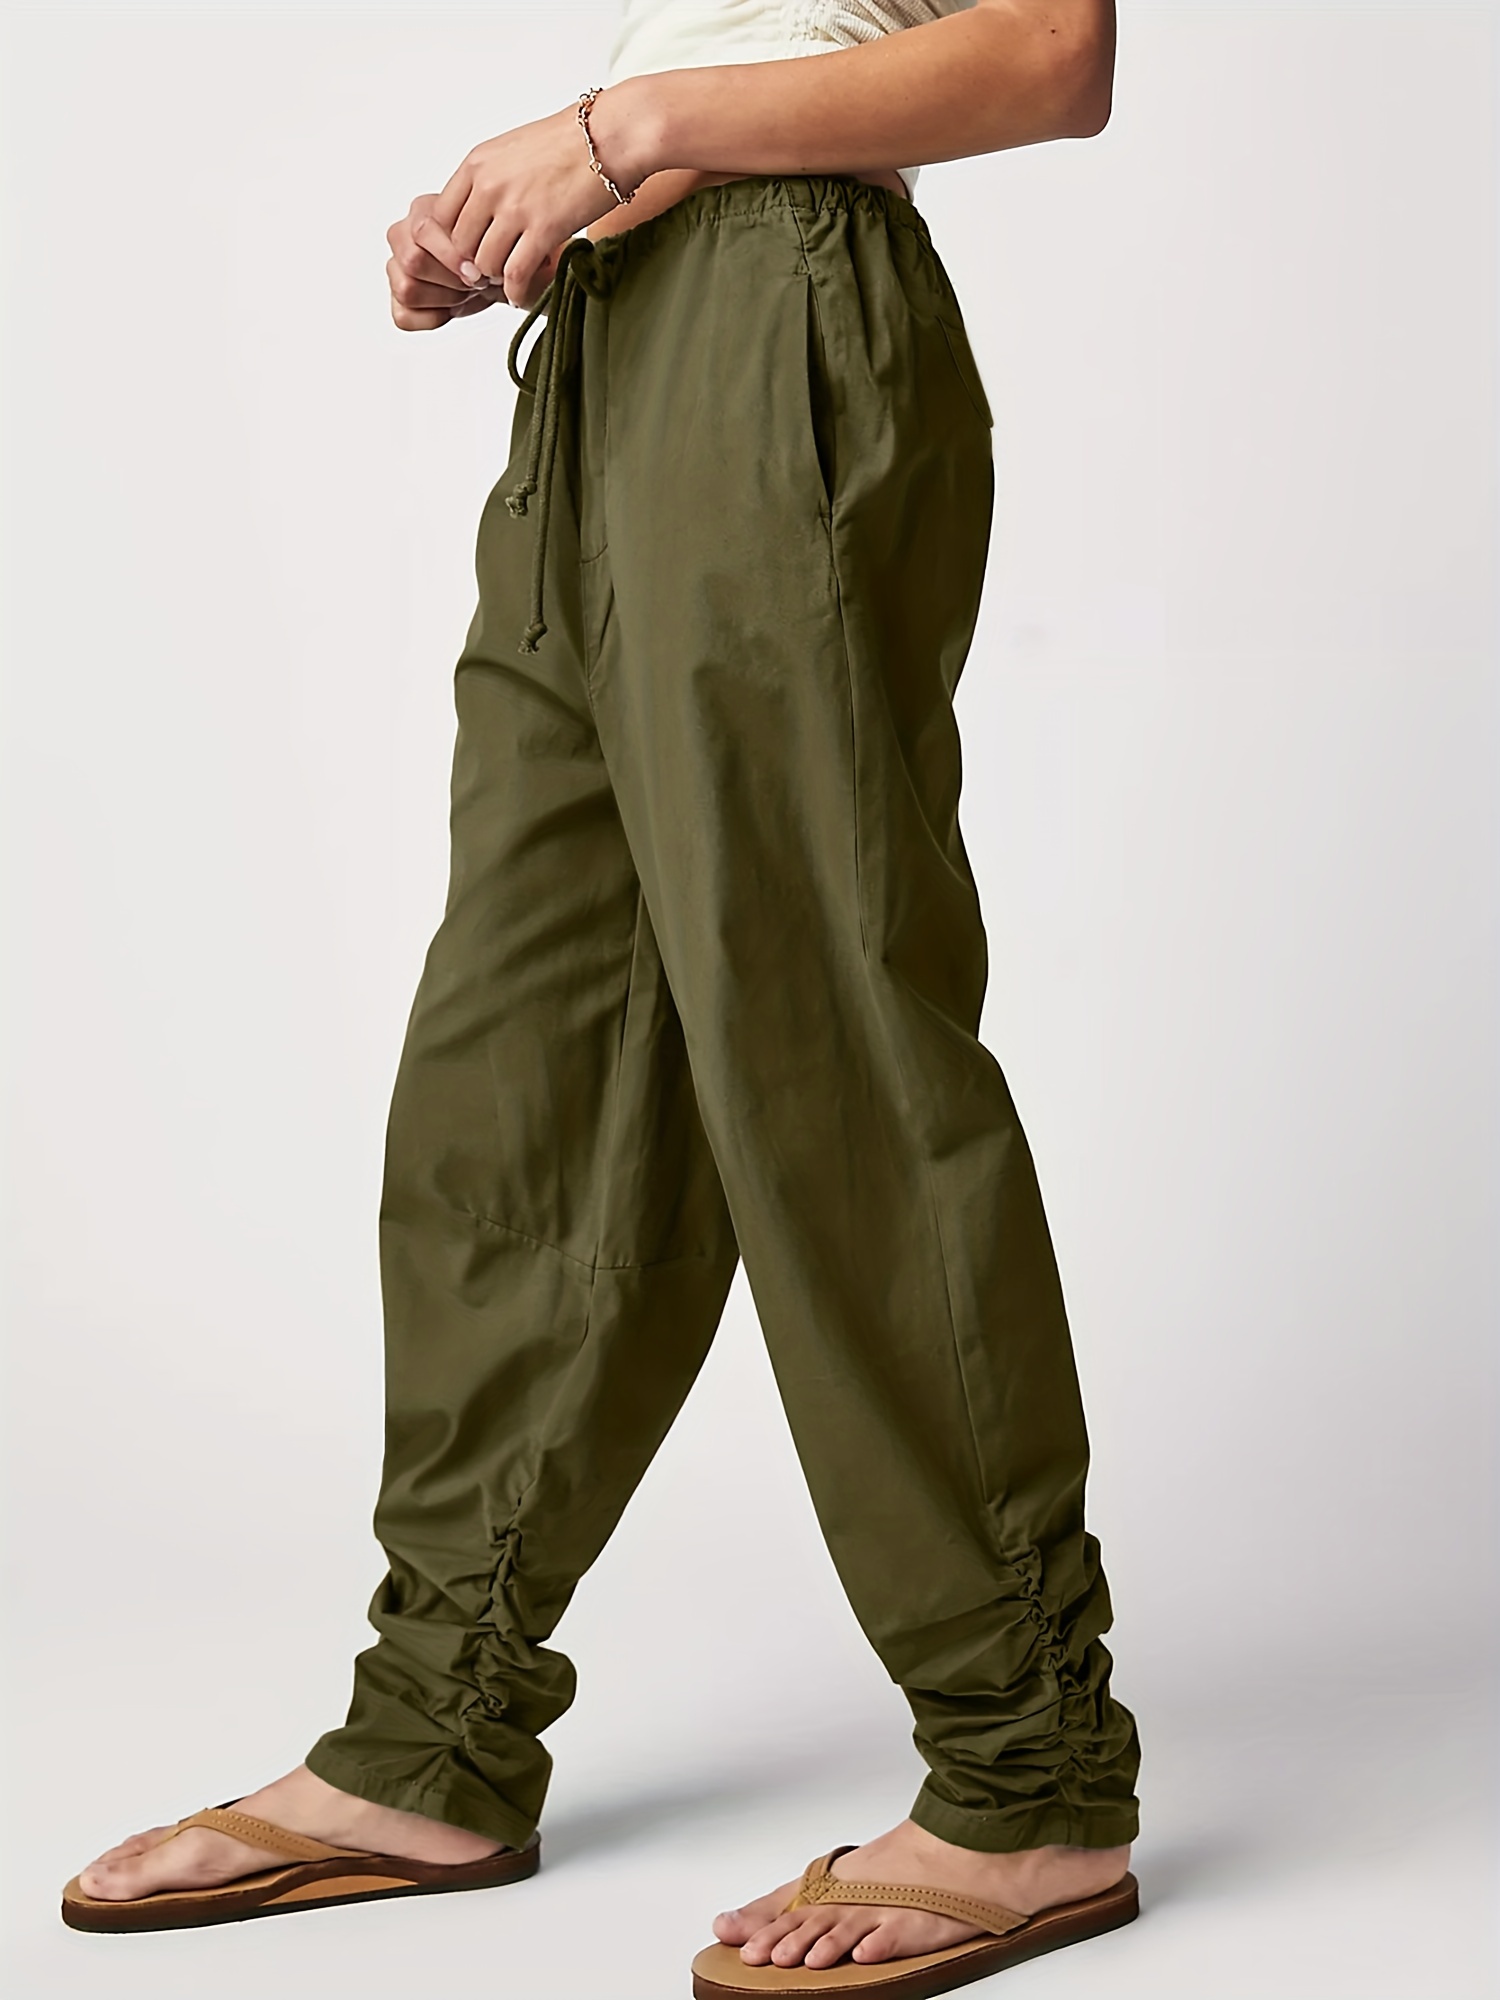 Pantalones militares, Ropa deportiva para mujeres, Pantalones de